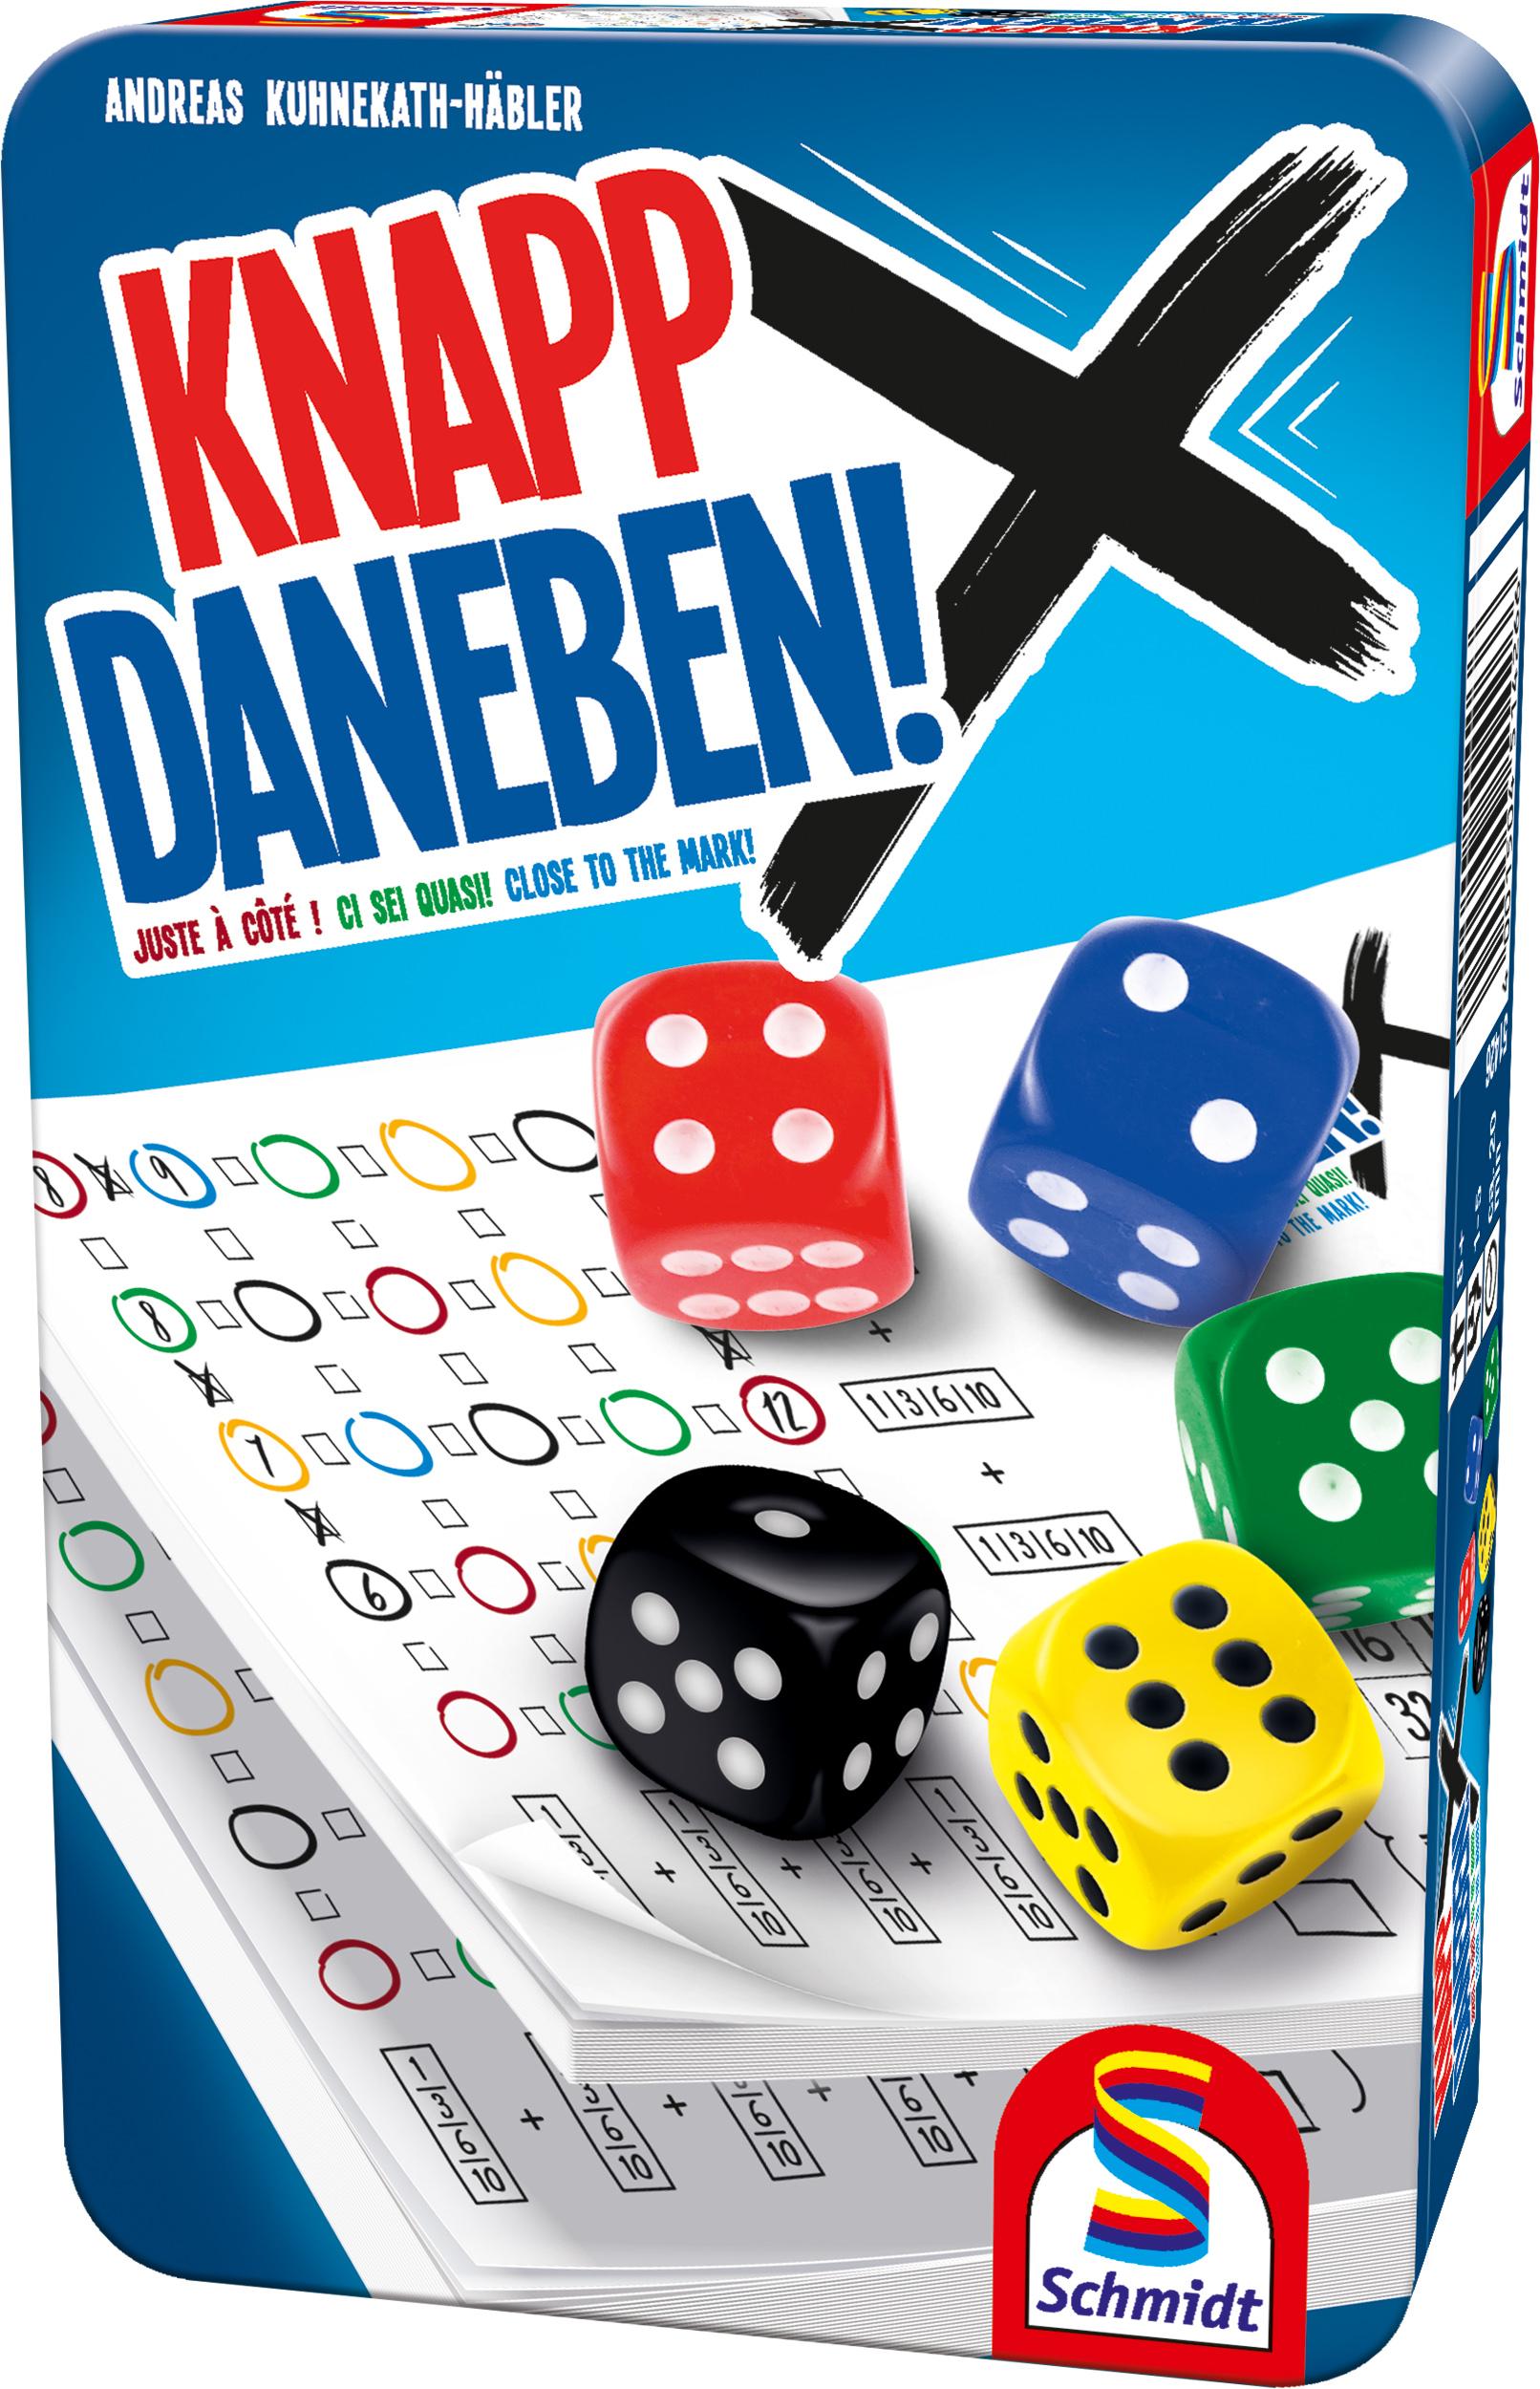 Knapp daneben Spielanleitung – PDF Download 0 (0)